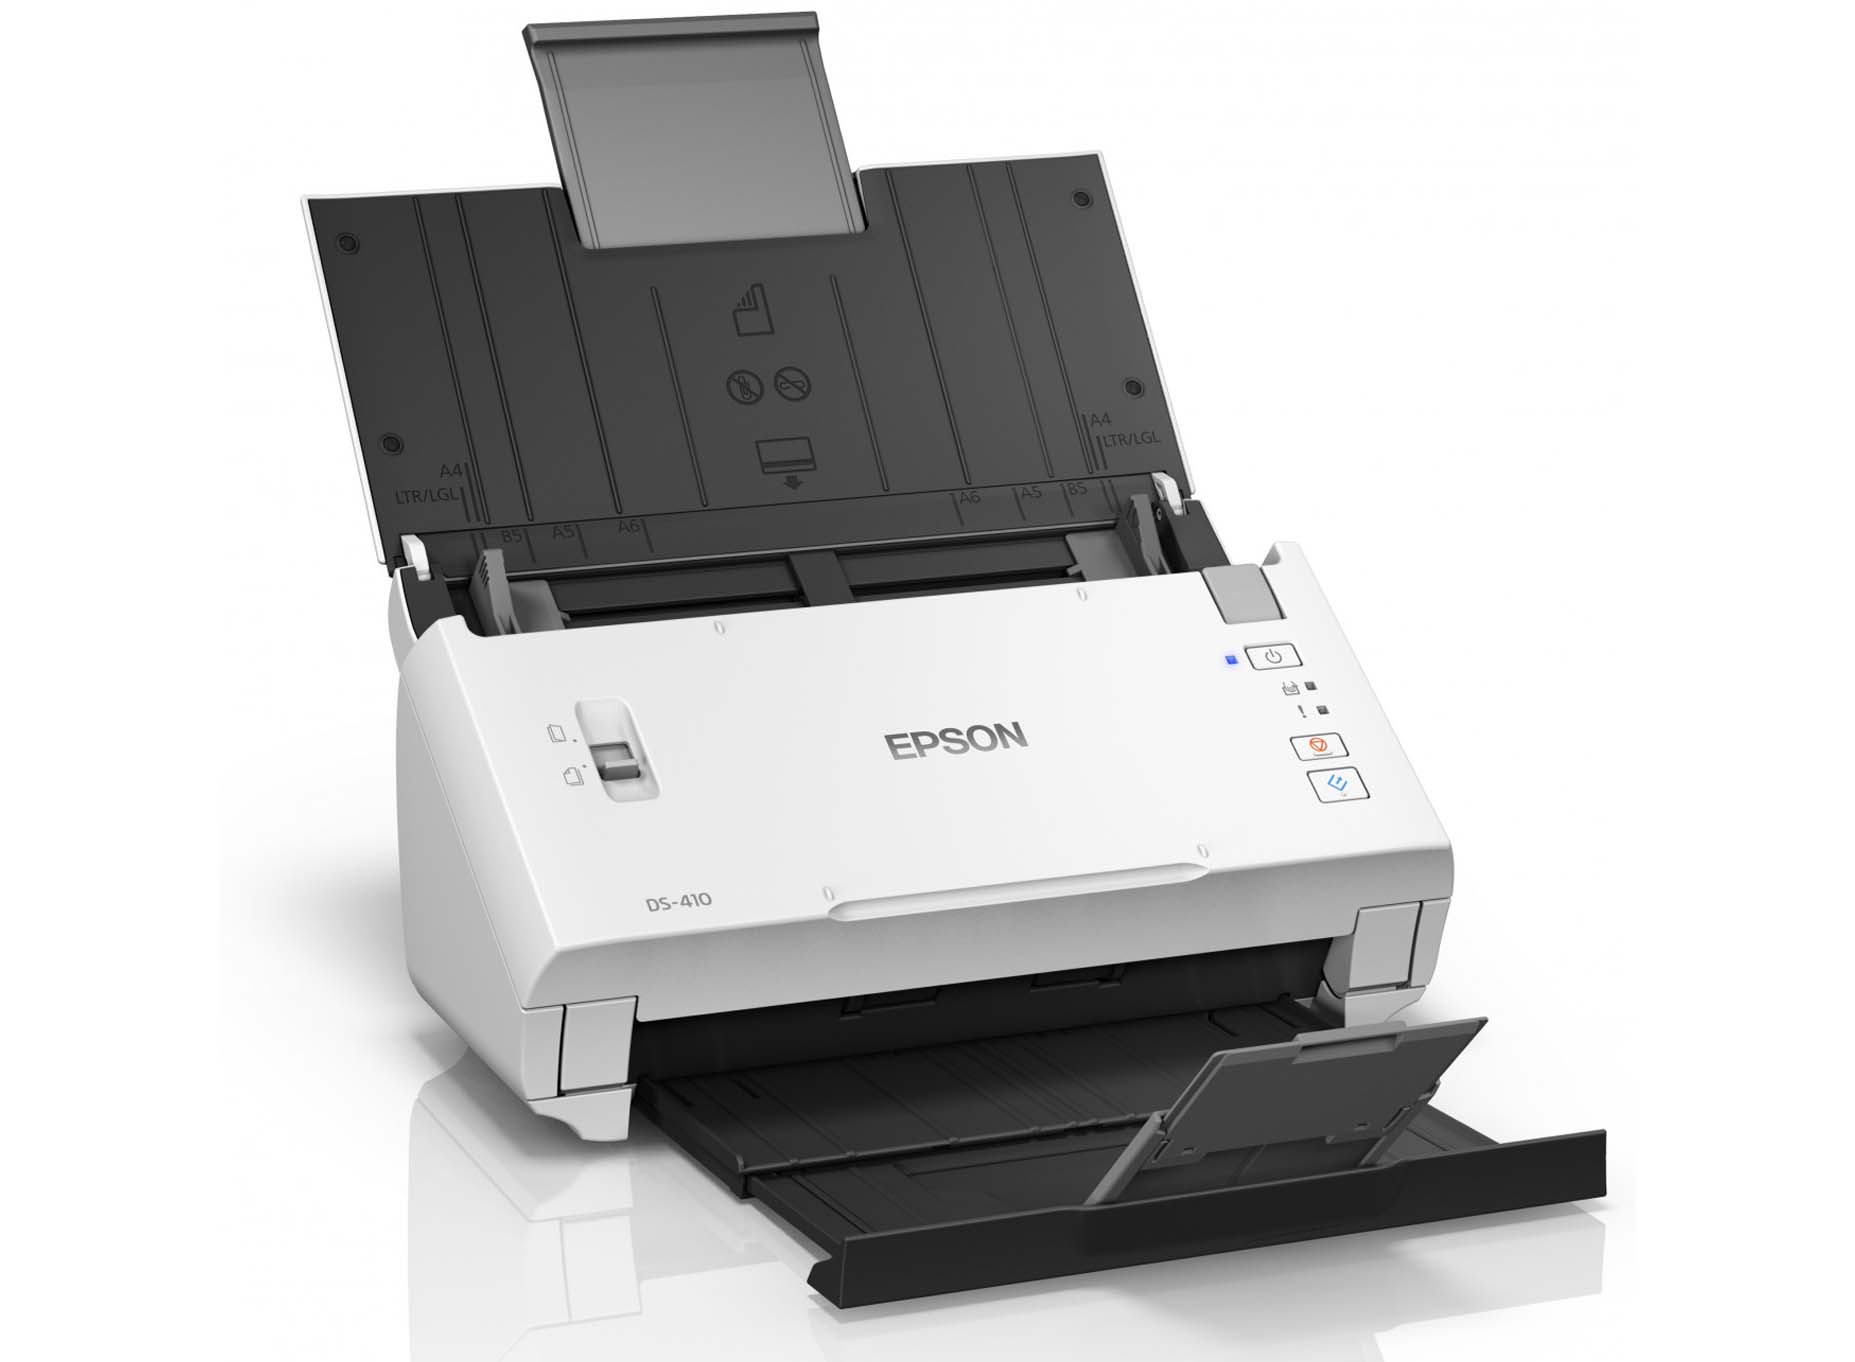 Harga jual Epson DS-410 Document Scanner